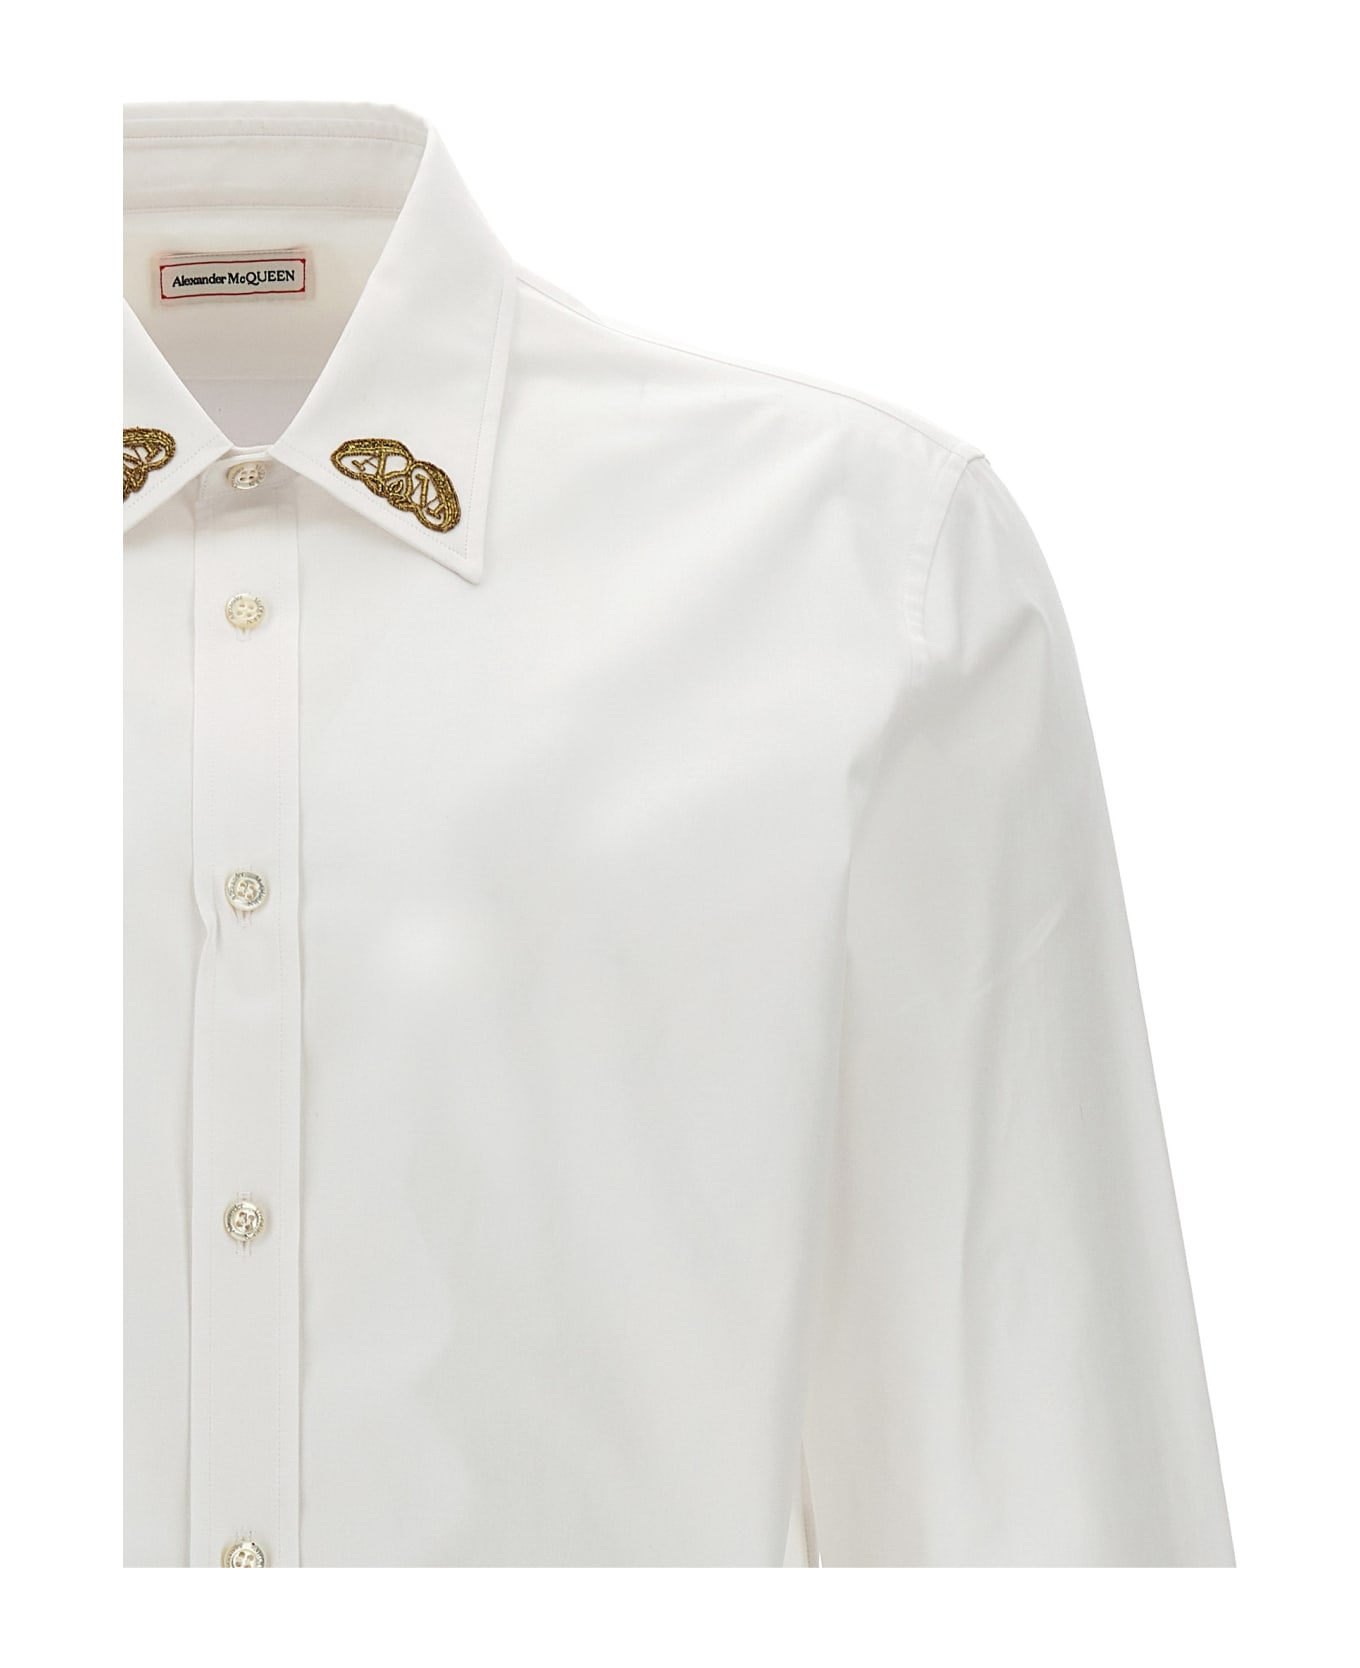 Alexander McQueen Embroidered Collar Shirt - White